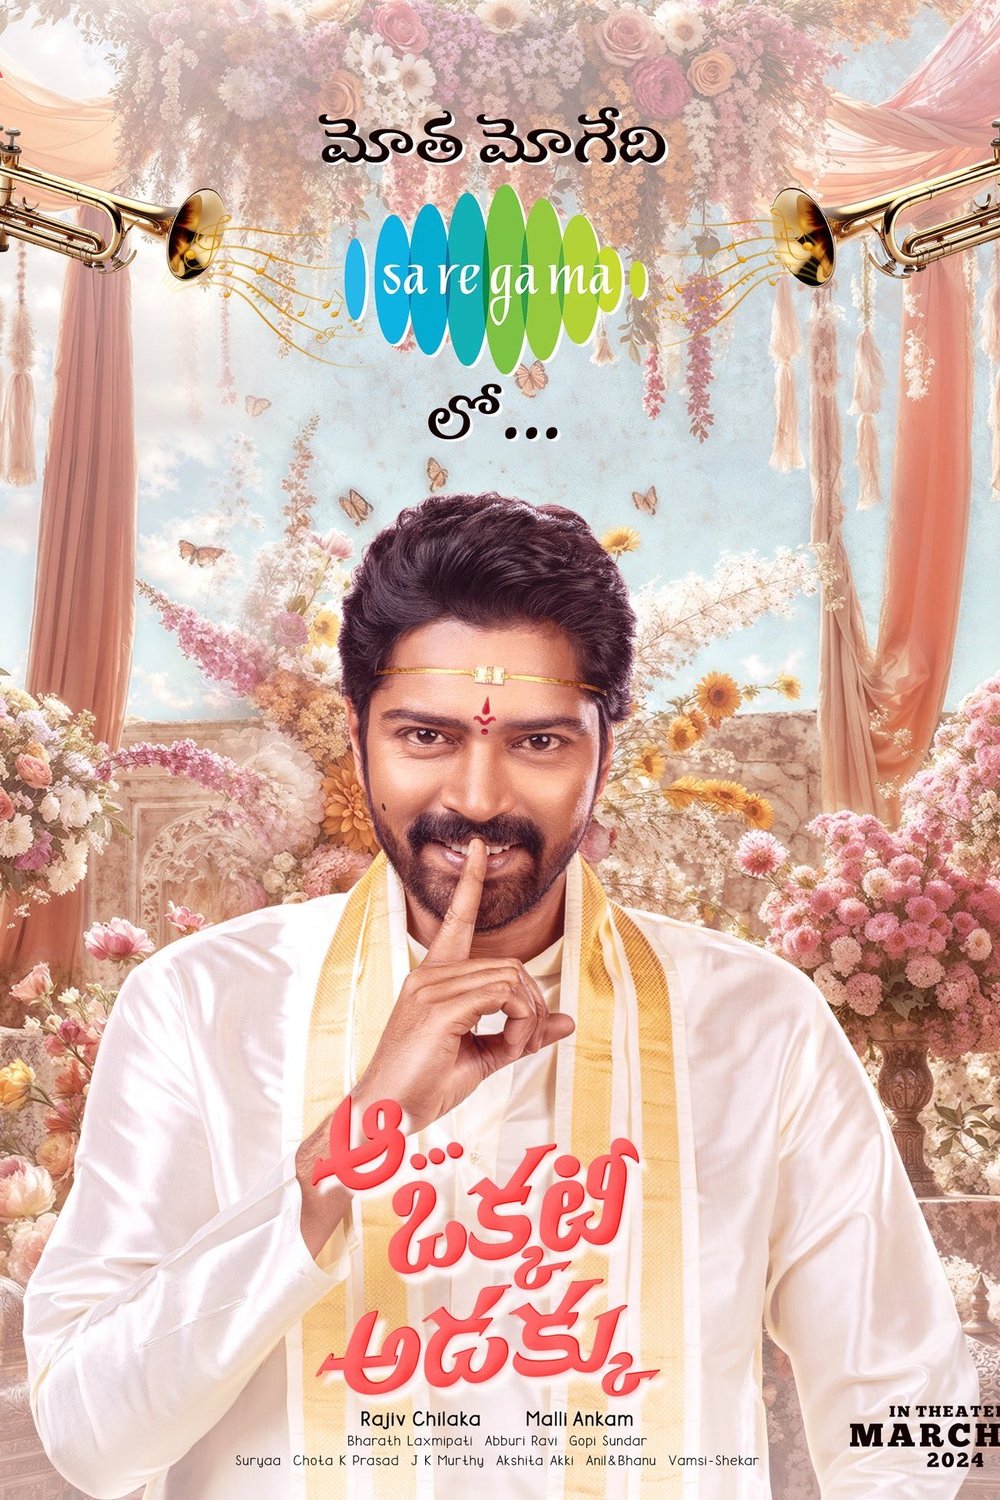 Telugu poster of the movie Aa Okkati Adakku